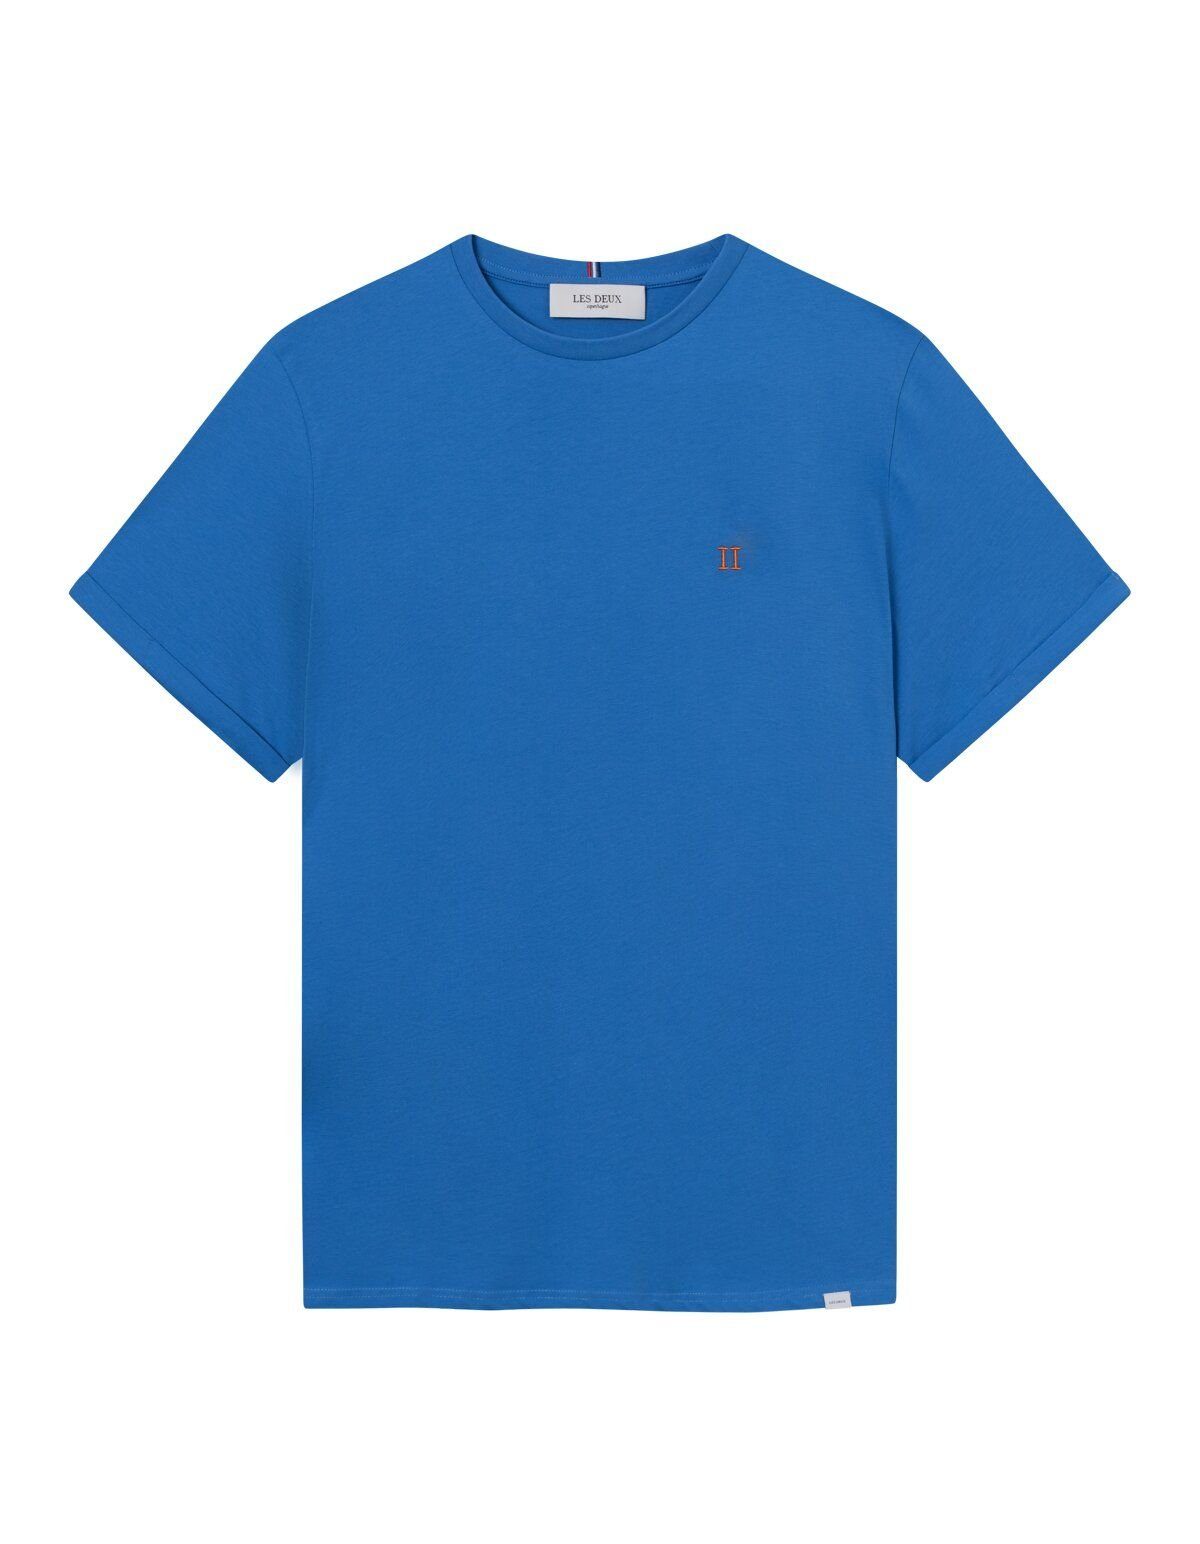 Les Deux T-Shirt reine Blue/o Bauumwolle, 471730-Palace atmungsaktiv